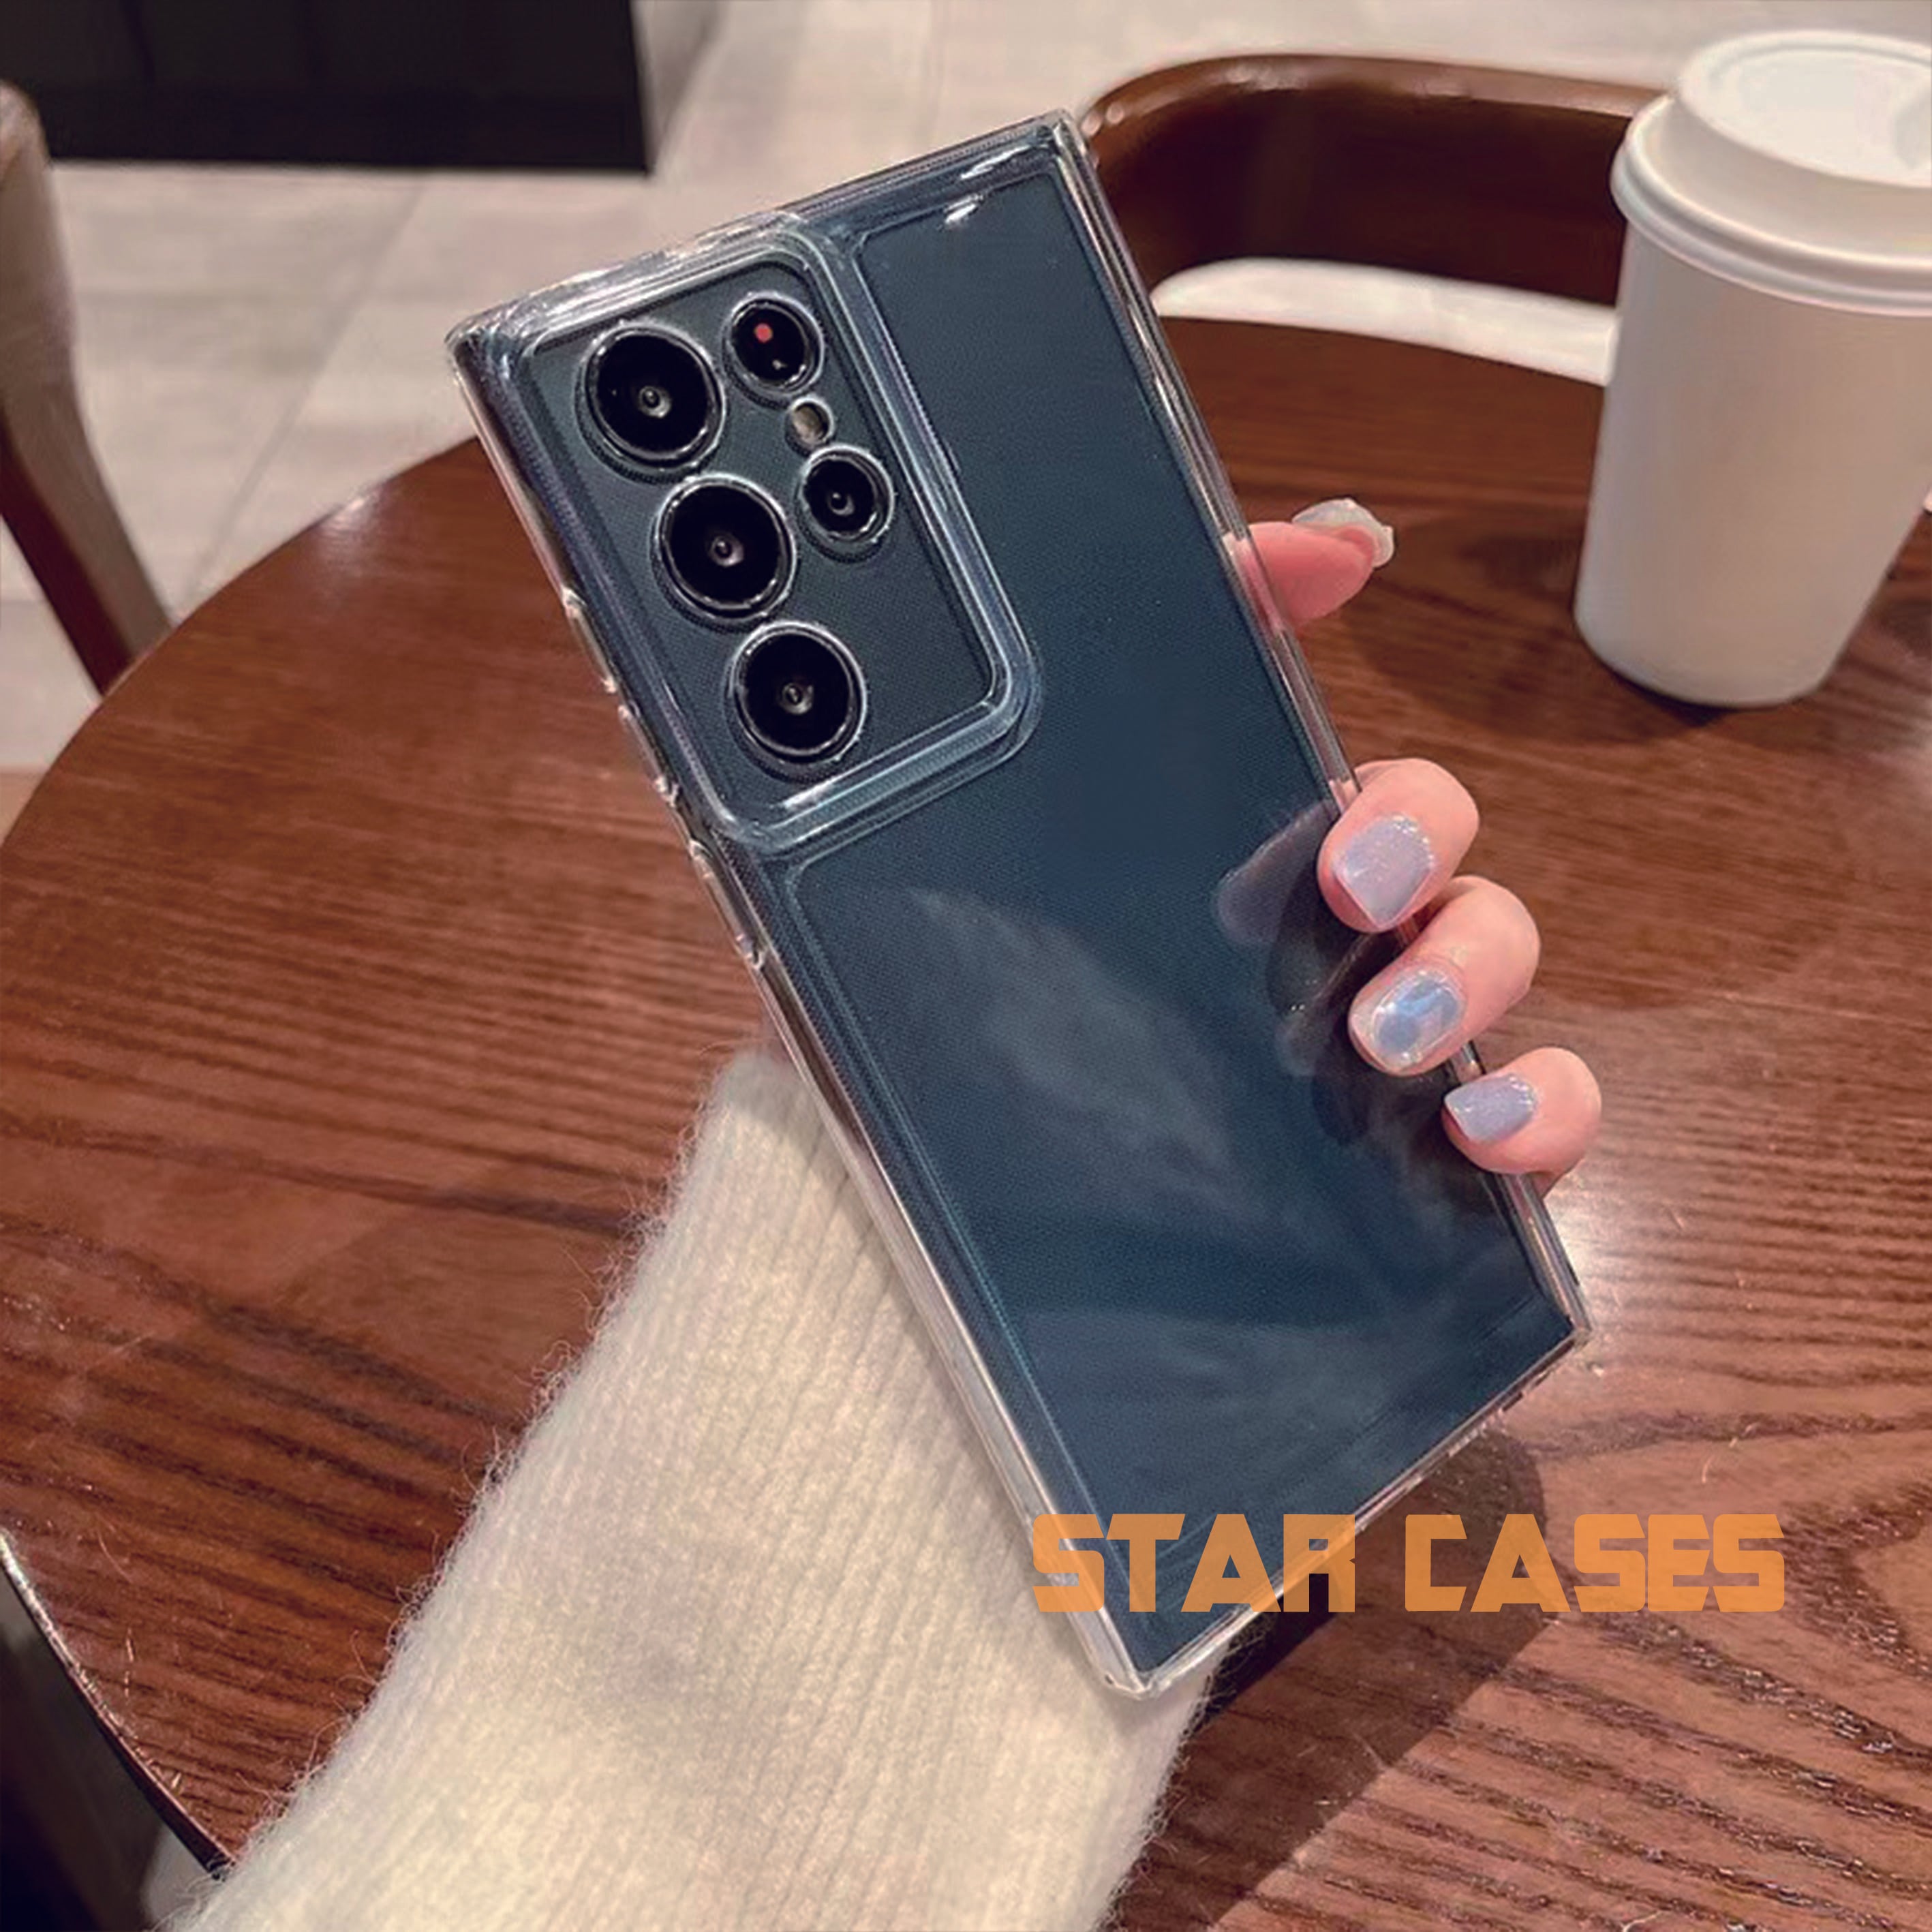 Samsung S21 Plus Space Soft Clear Case